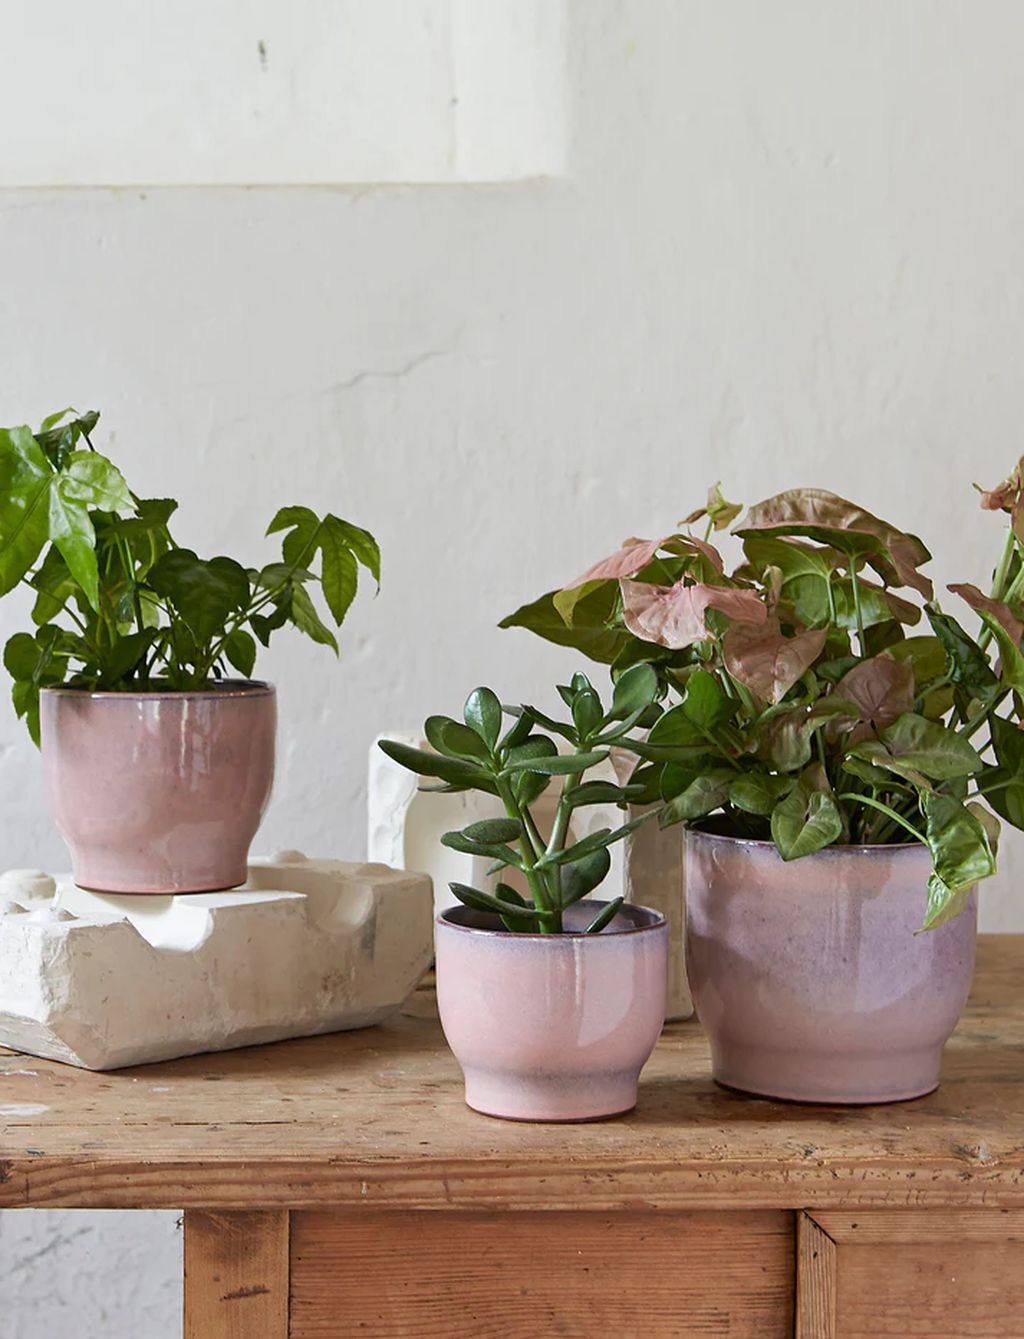 Knabstrup Keramik Blumentopf ø 12,5 Cm, Rosa